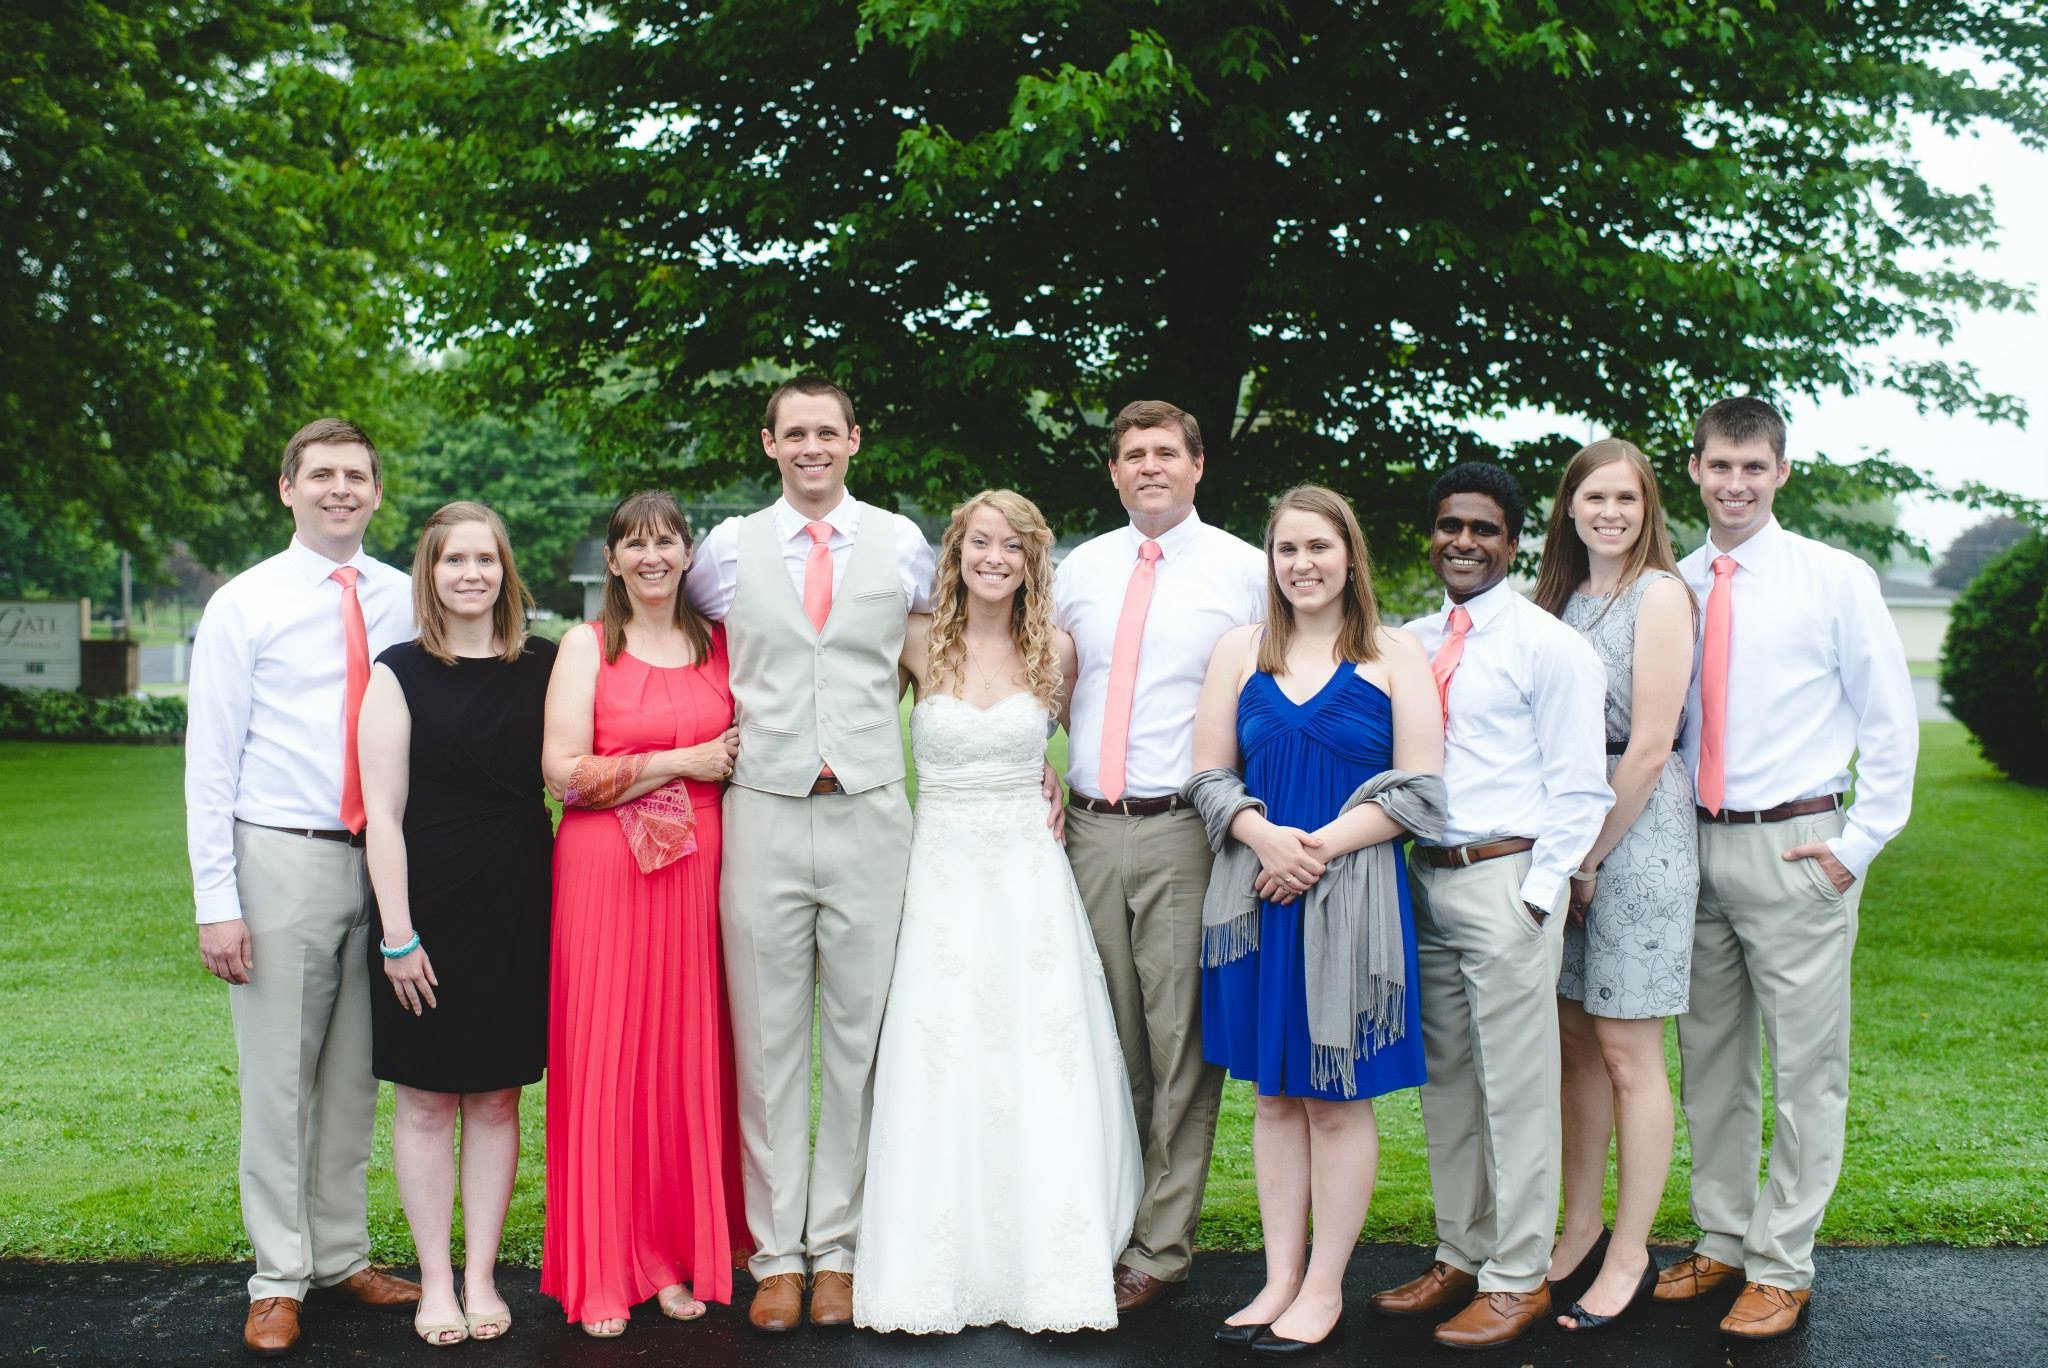 Megan and Jonathan's wedding - June 13, 2015